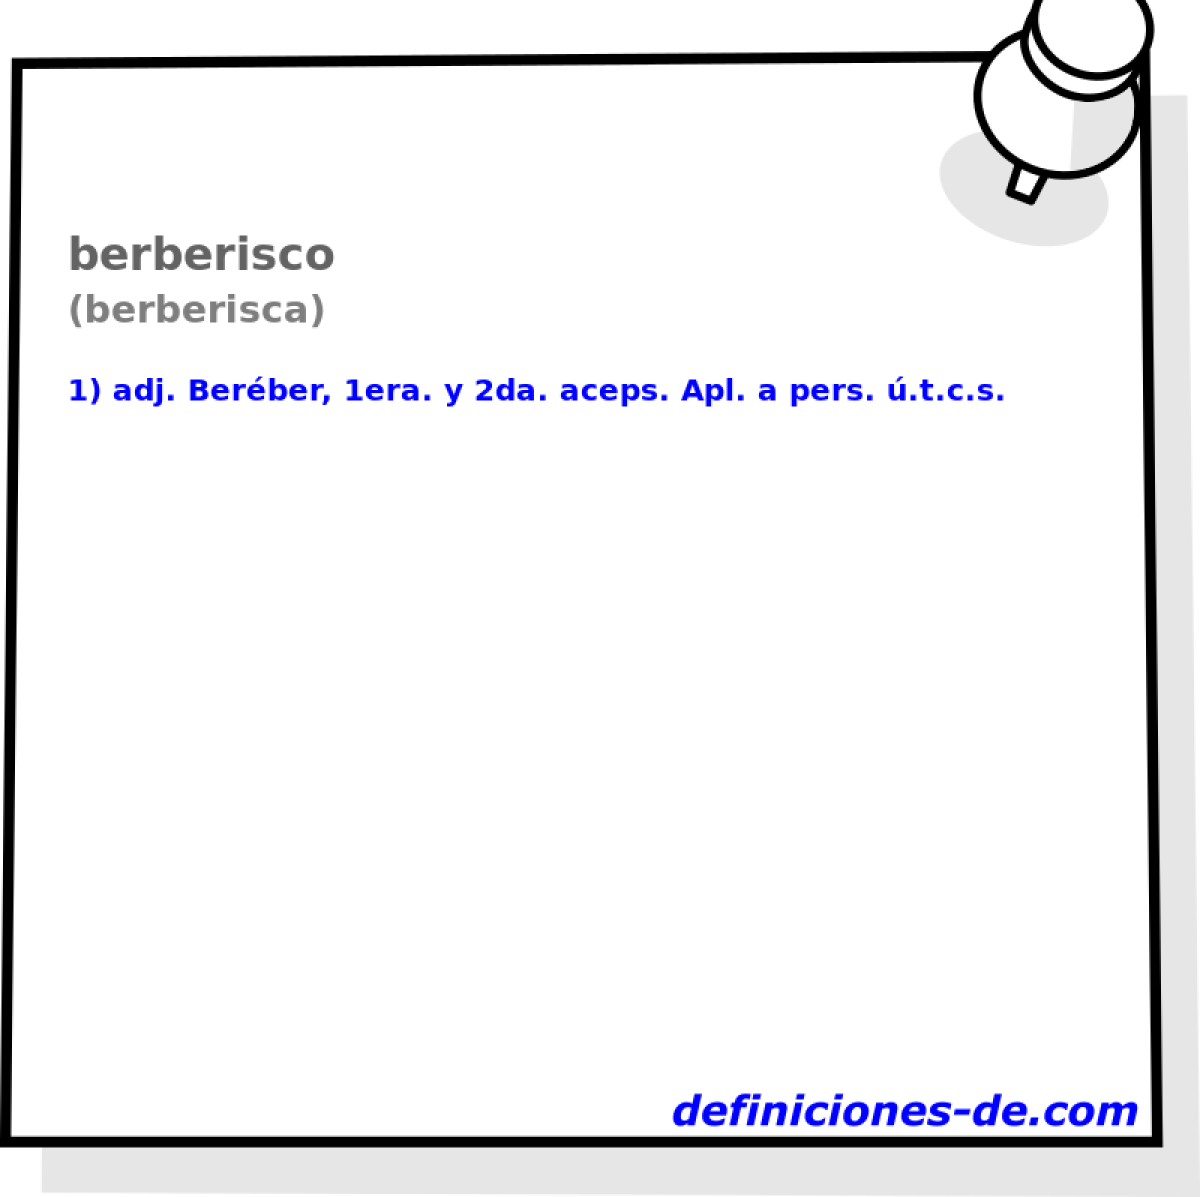 berberisco (berberisca)